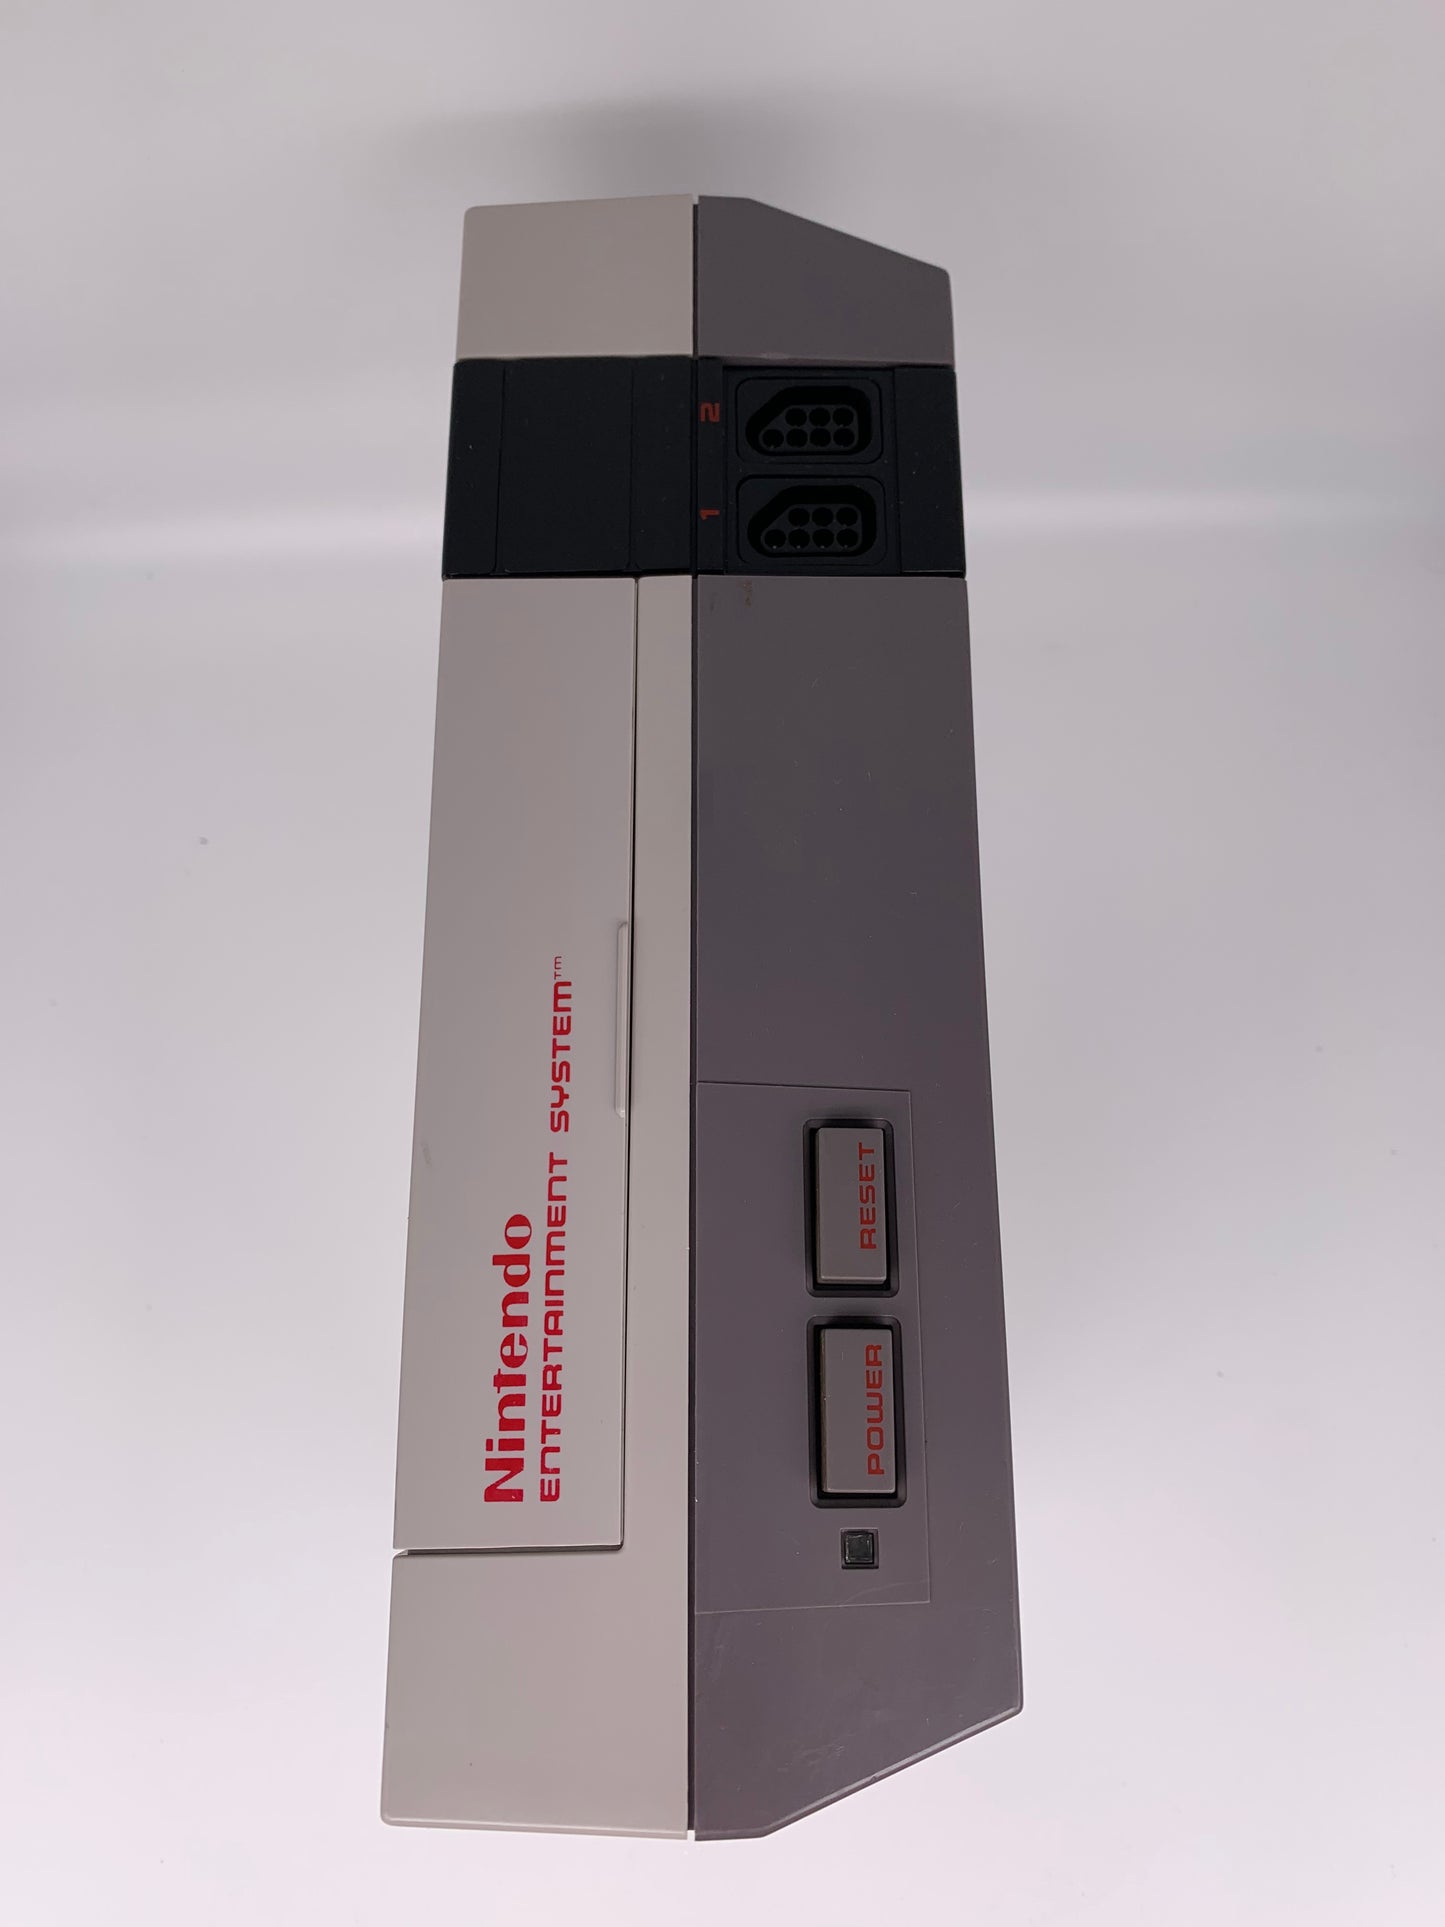 NiNTENDO [NES] CONSOLE | MODEL CONTROL DECK NES-001